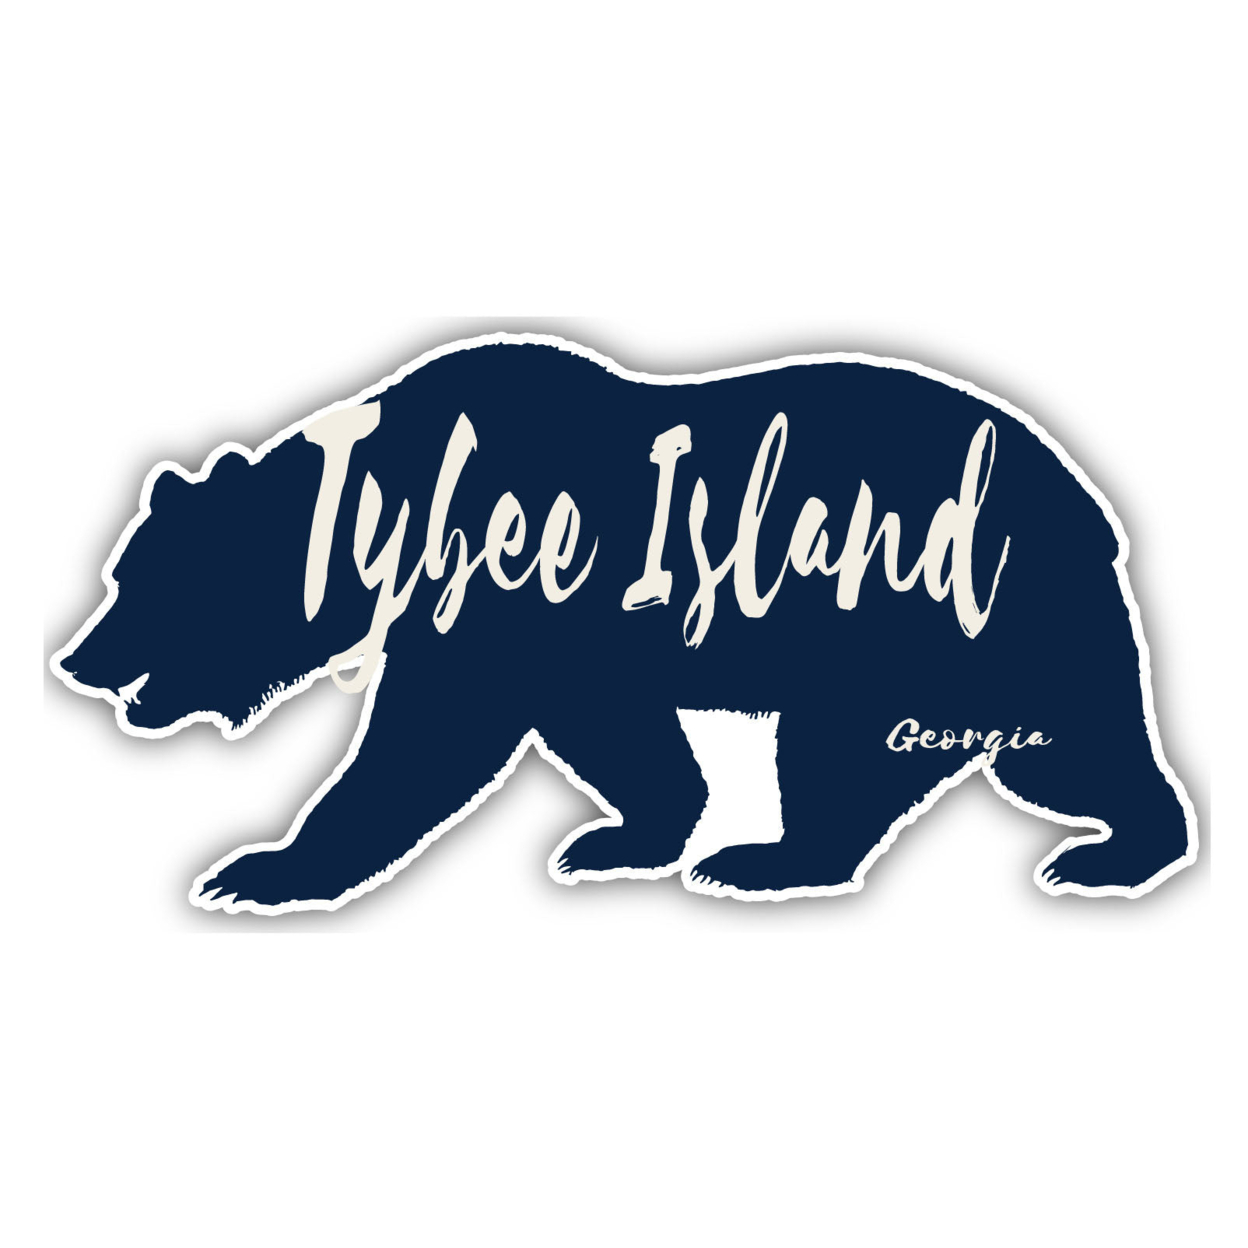 Tybee Island Georgia Souvenir Decorative Stickers (Choose Theme And Size) - Single Unit, 2-Inch, Bear